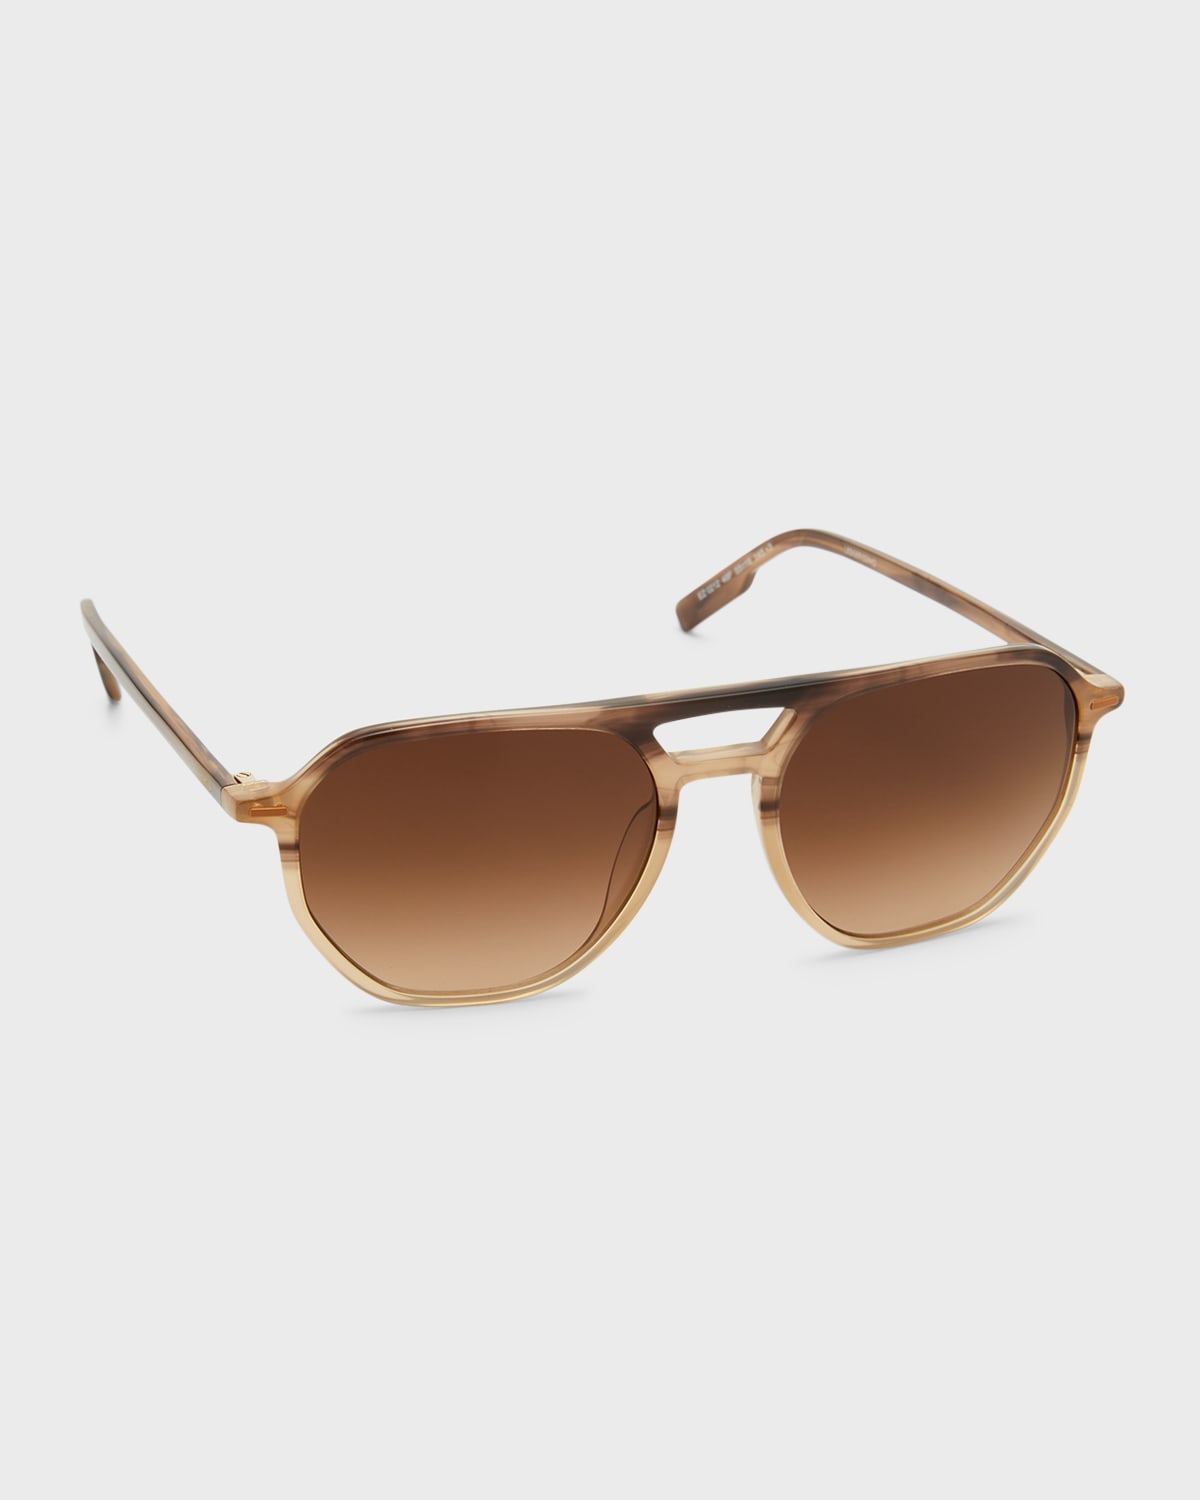 Zegna 55mm Aviator Sunglasses In Brown